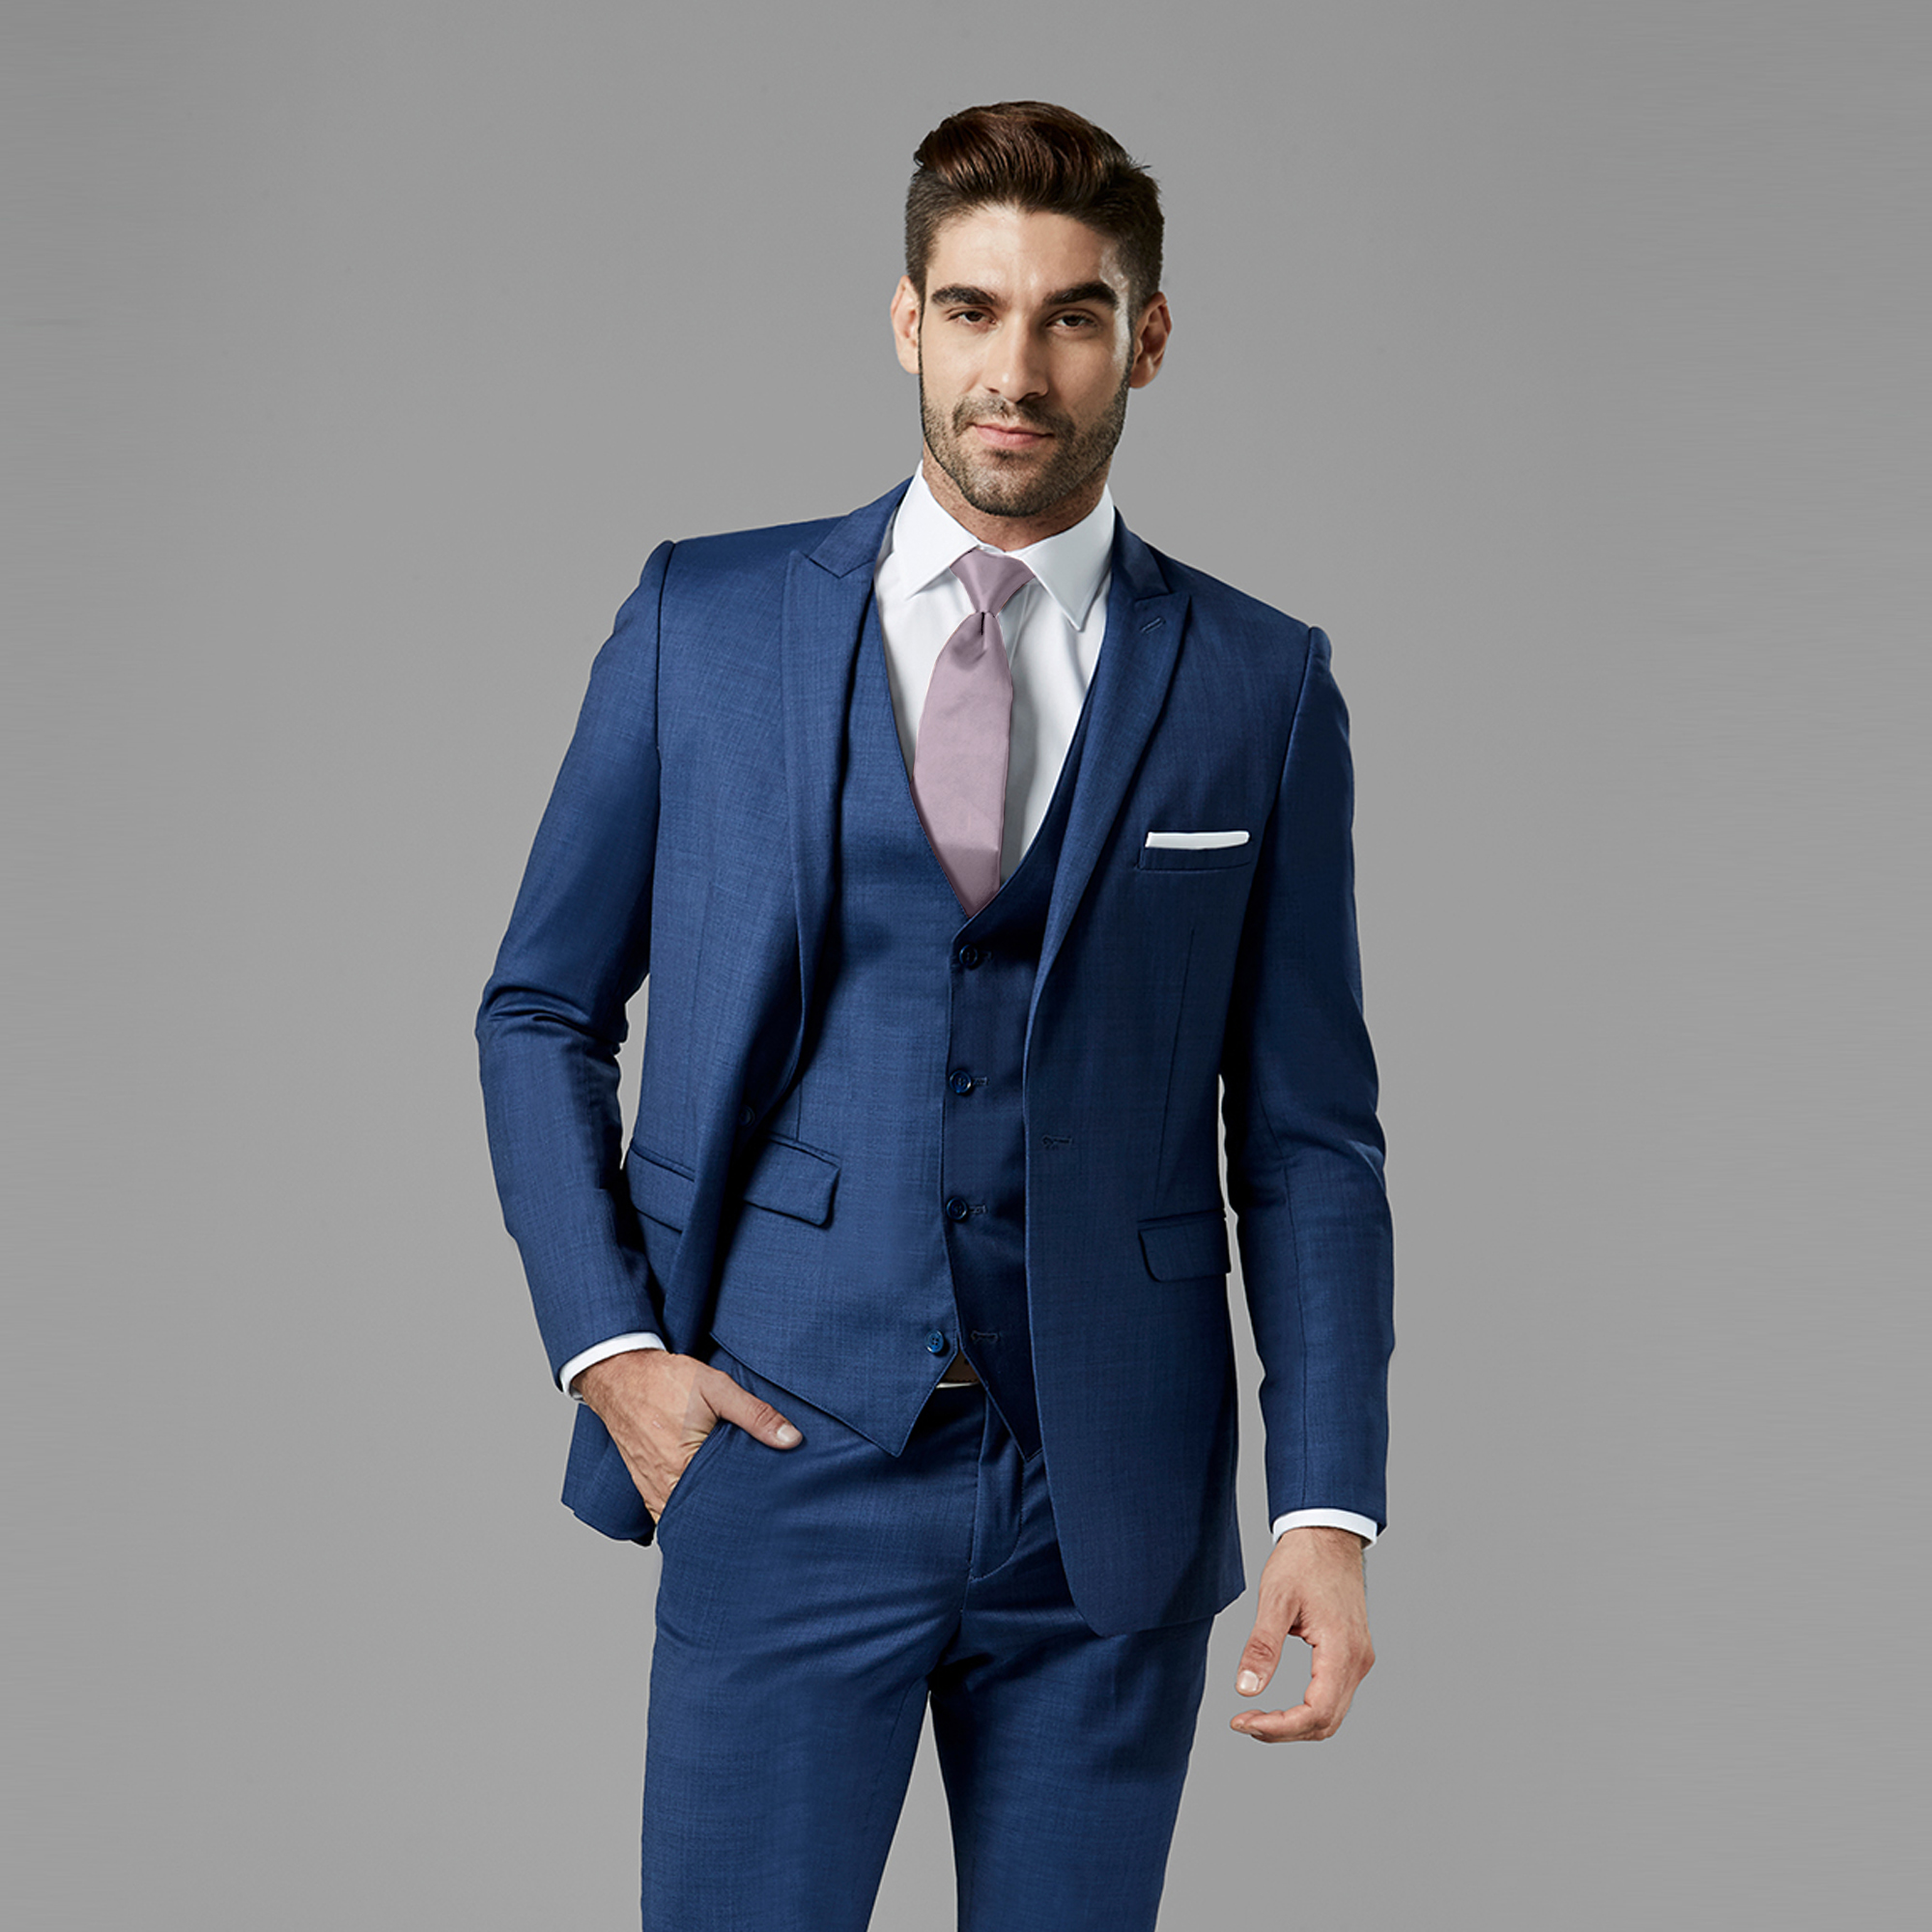 55+ Best Suit, Shirt and Tie Color Combinations for Men